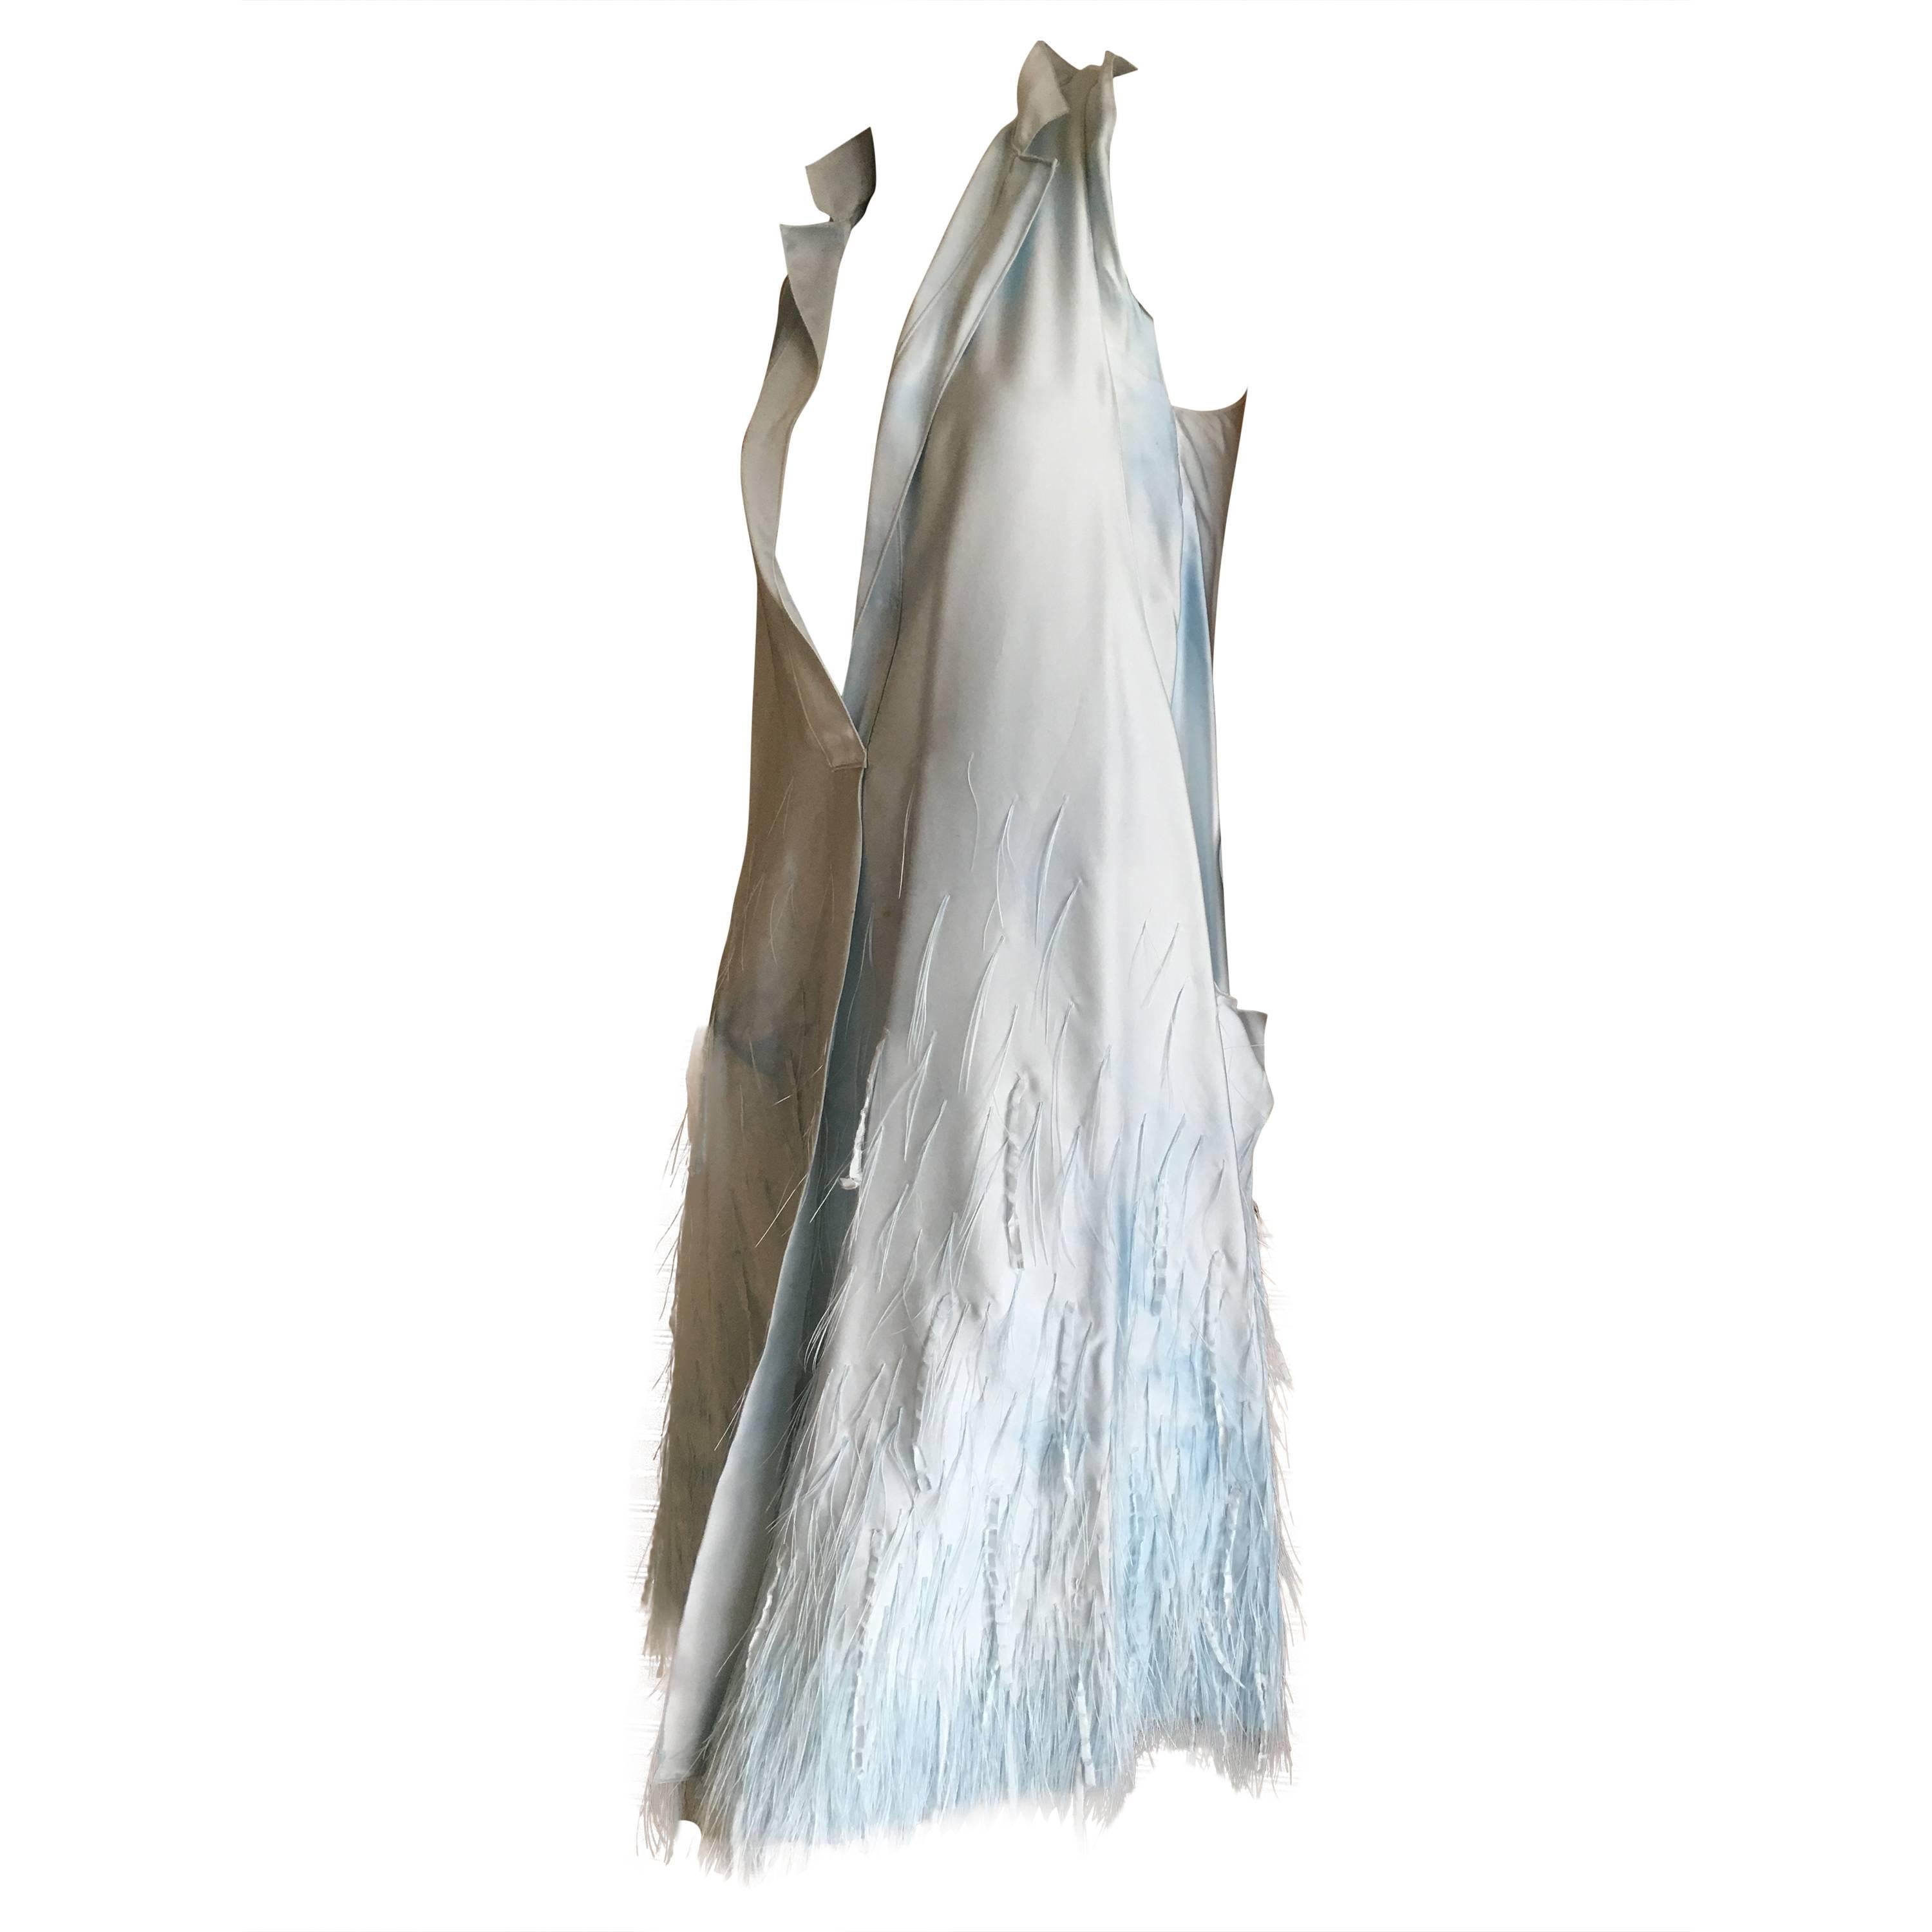 Bottega Veneta Pale Turquoise Feathered Silk Dress by Tomas Maier For Sale